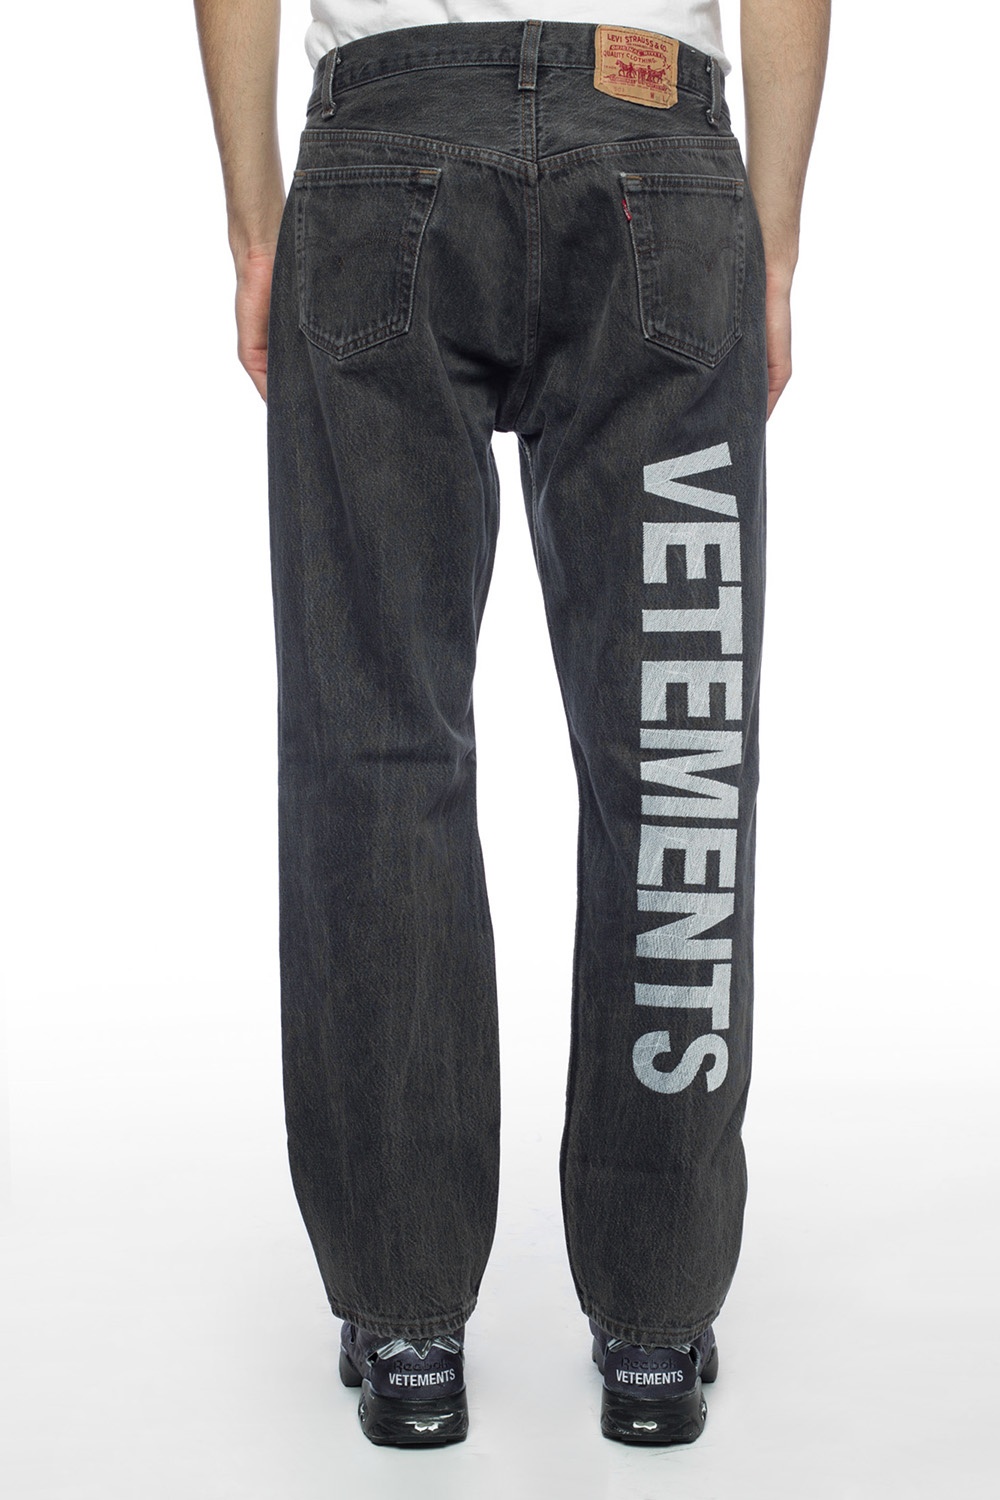 VETEMENTS Vetements x Levi's | Men's Clothing | Vitkac